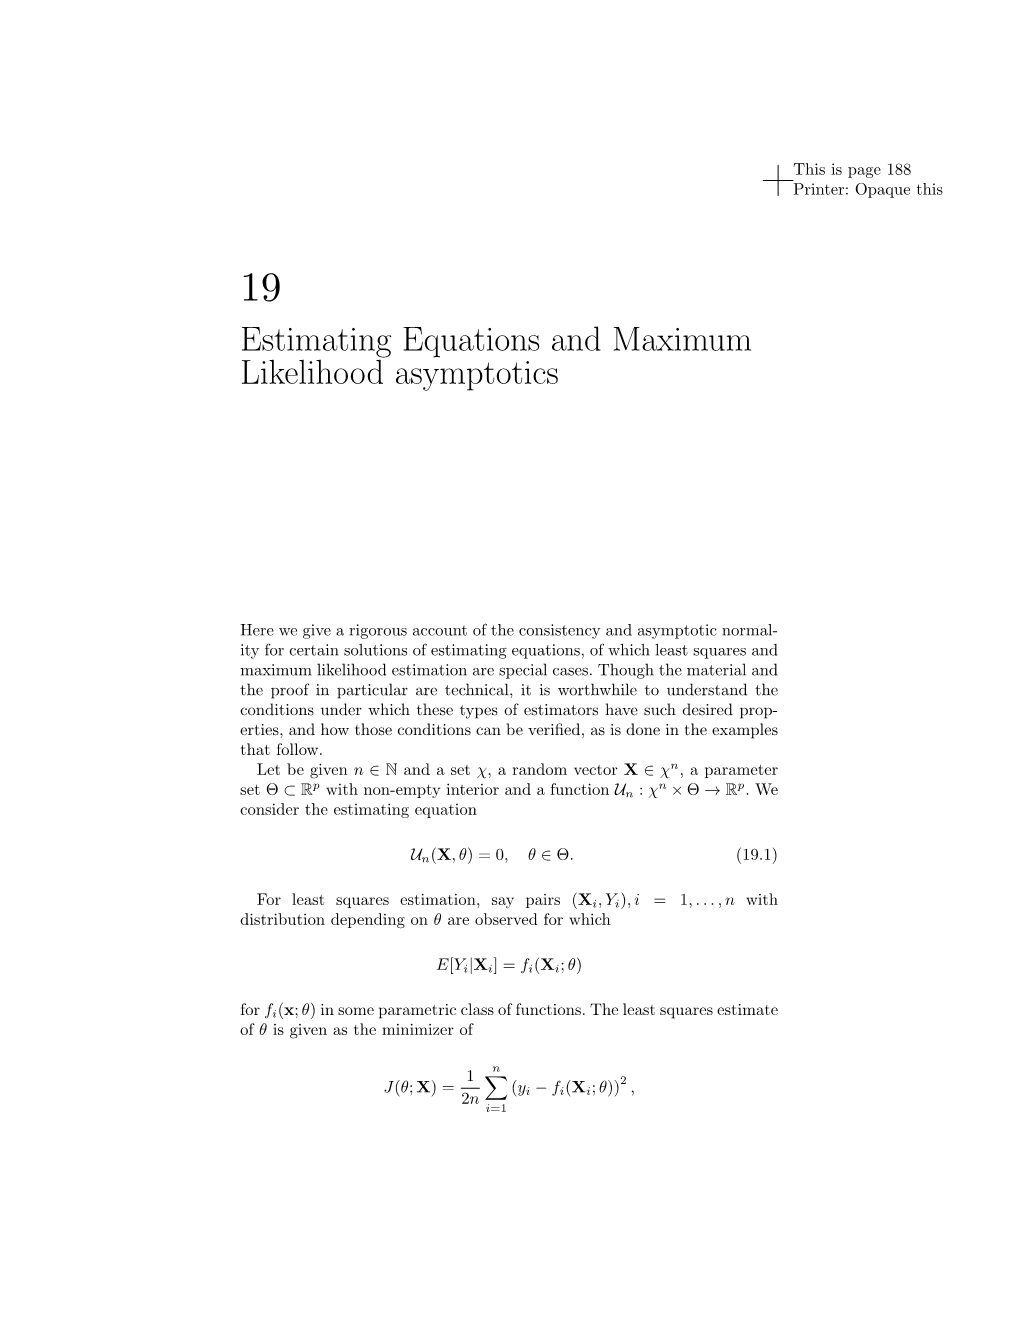 Estimating Equations and Maximum Likelihood Asymptotics